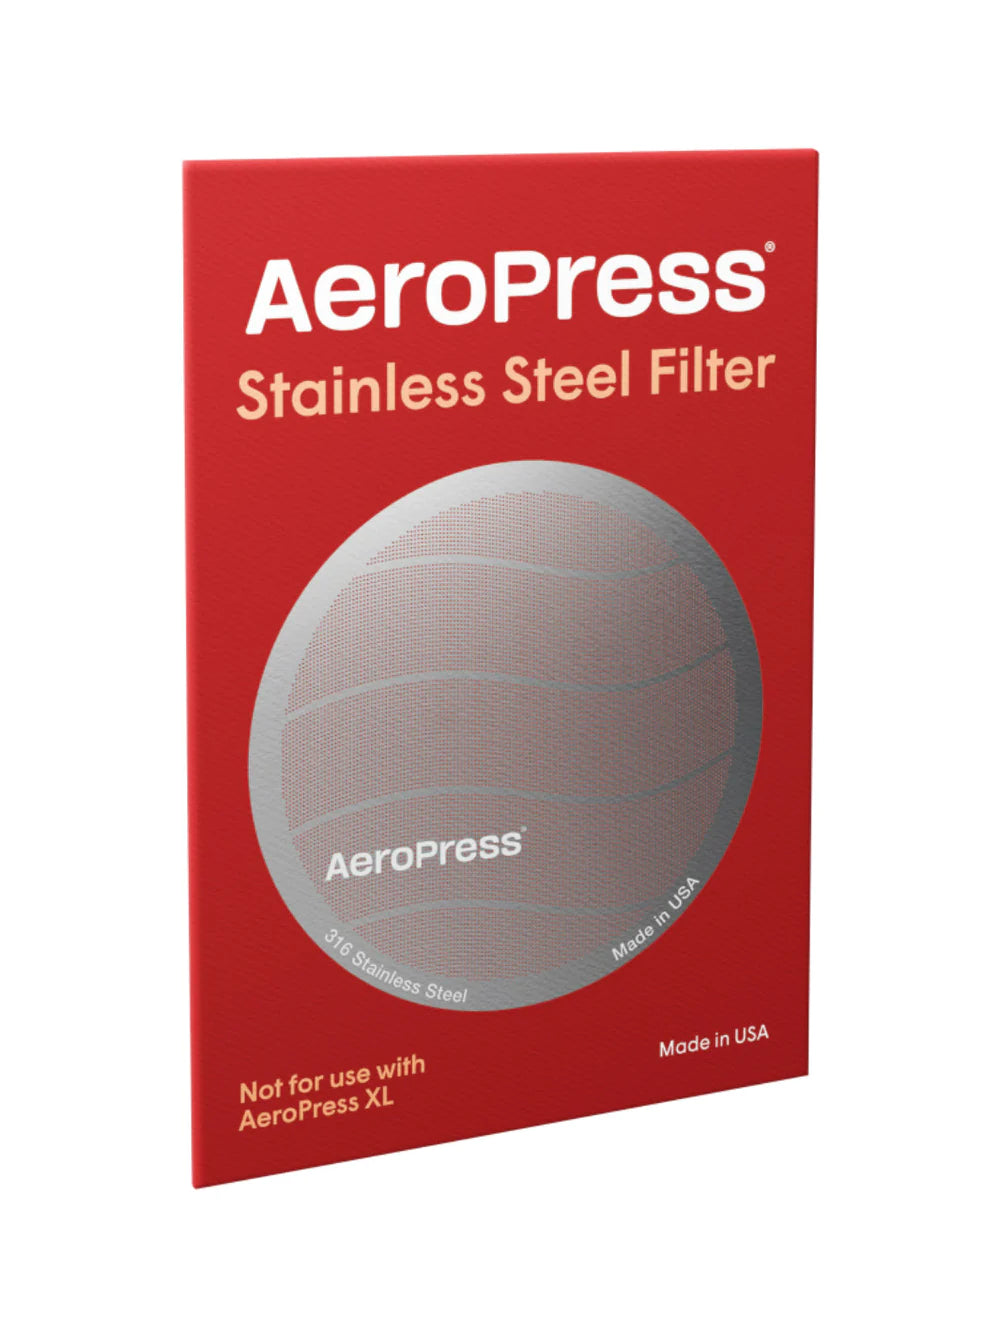 AeroPress Stainless Steel Reusable Filter - Image 1